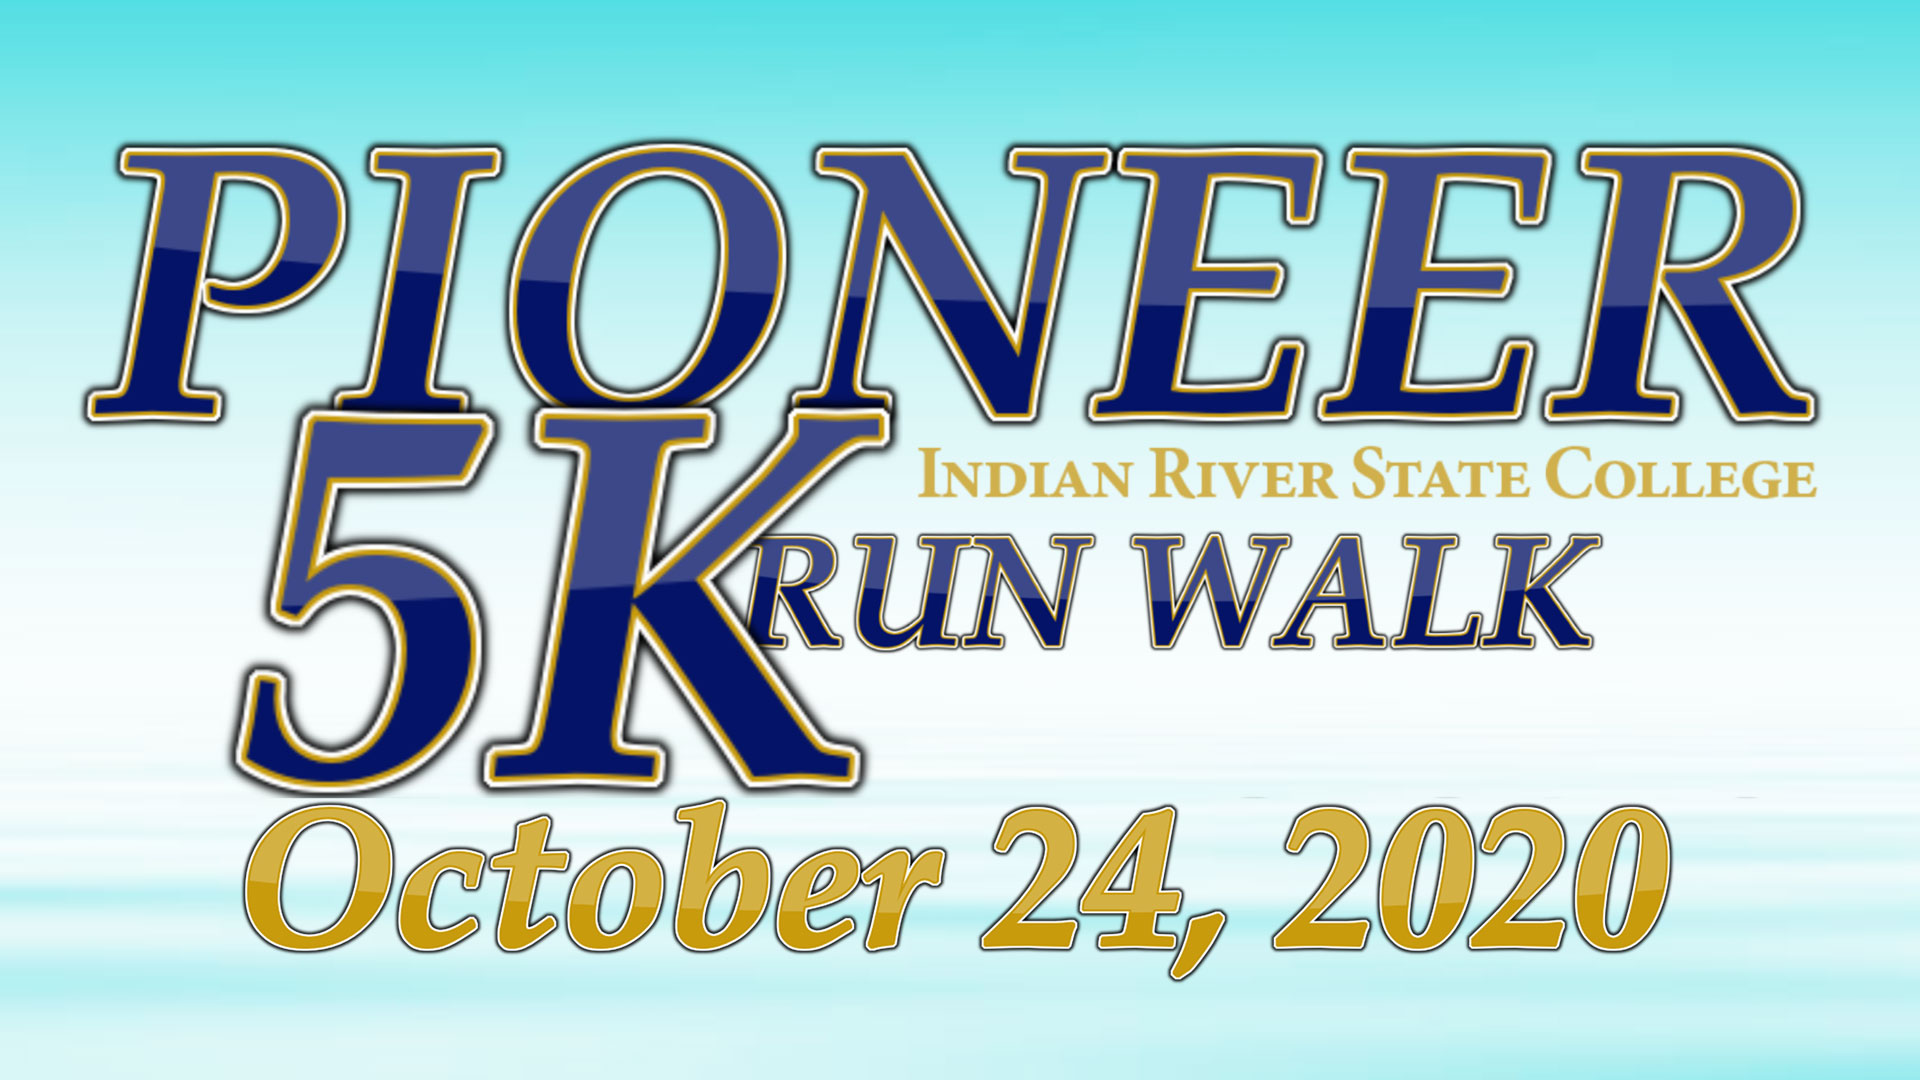 the 香港王中王 Foundation will host the thrid annual Pioneer 5k Run/Walk on Saturday, October 24.